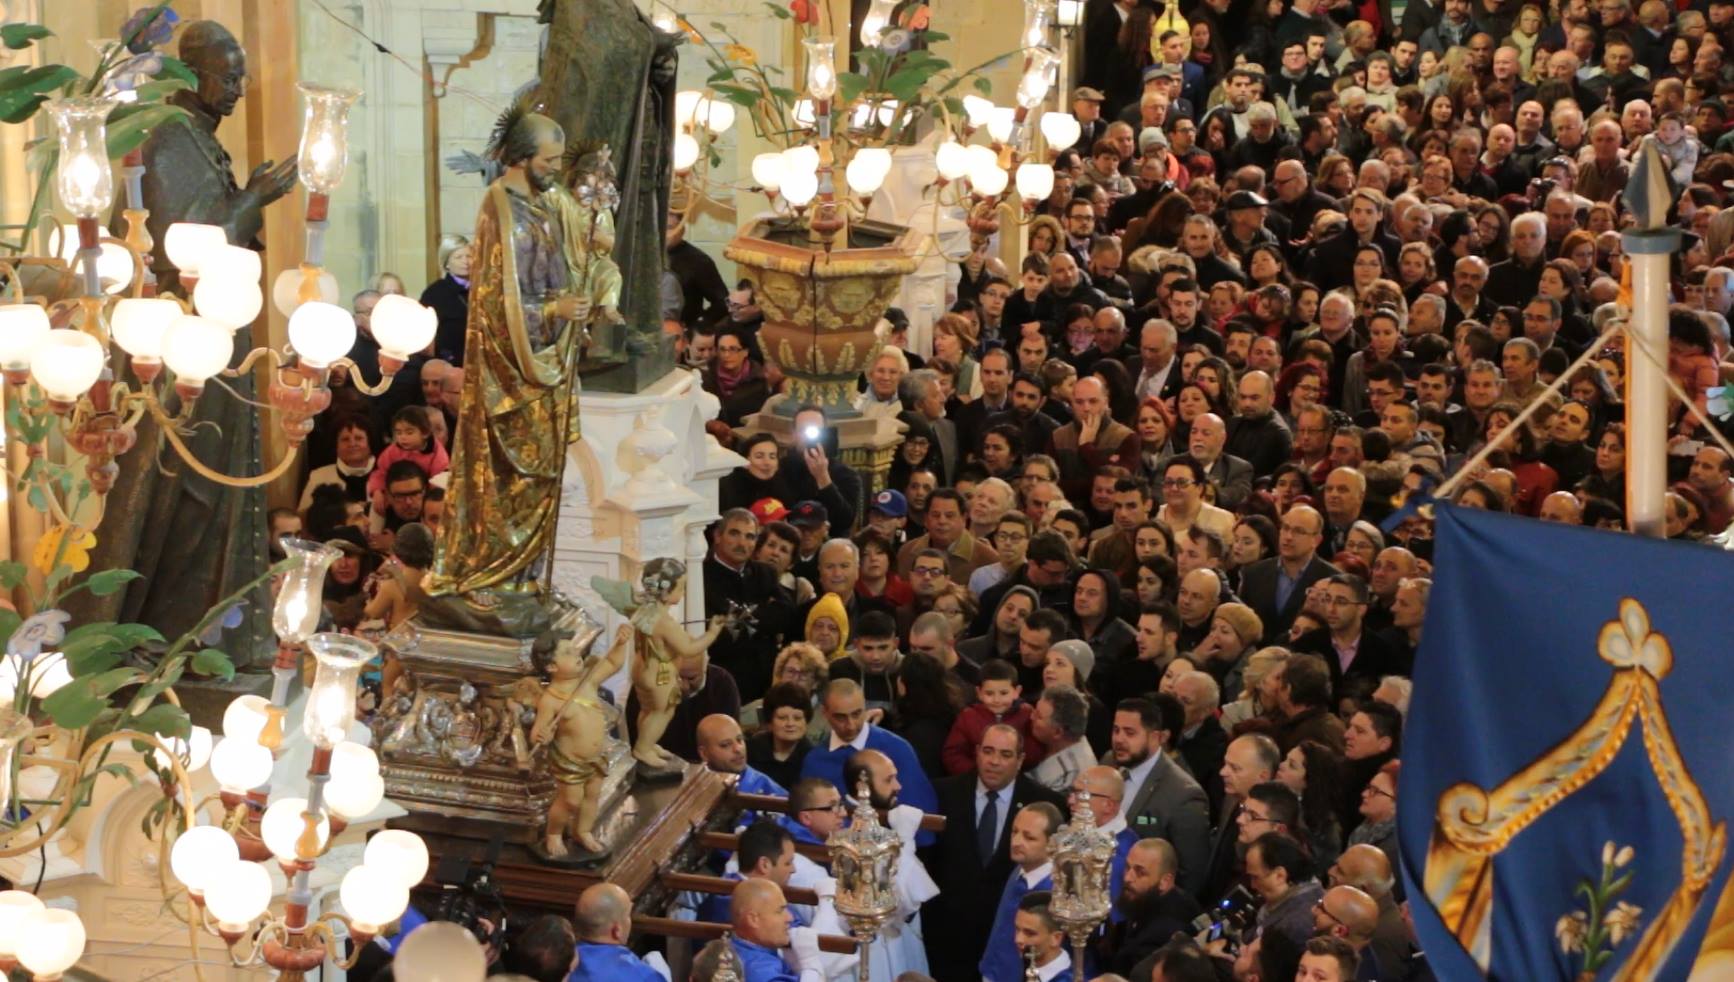 St Joseph “San Ġużepp” feast celebrations in Rabat